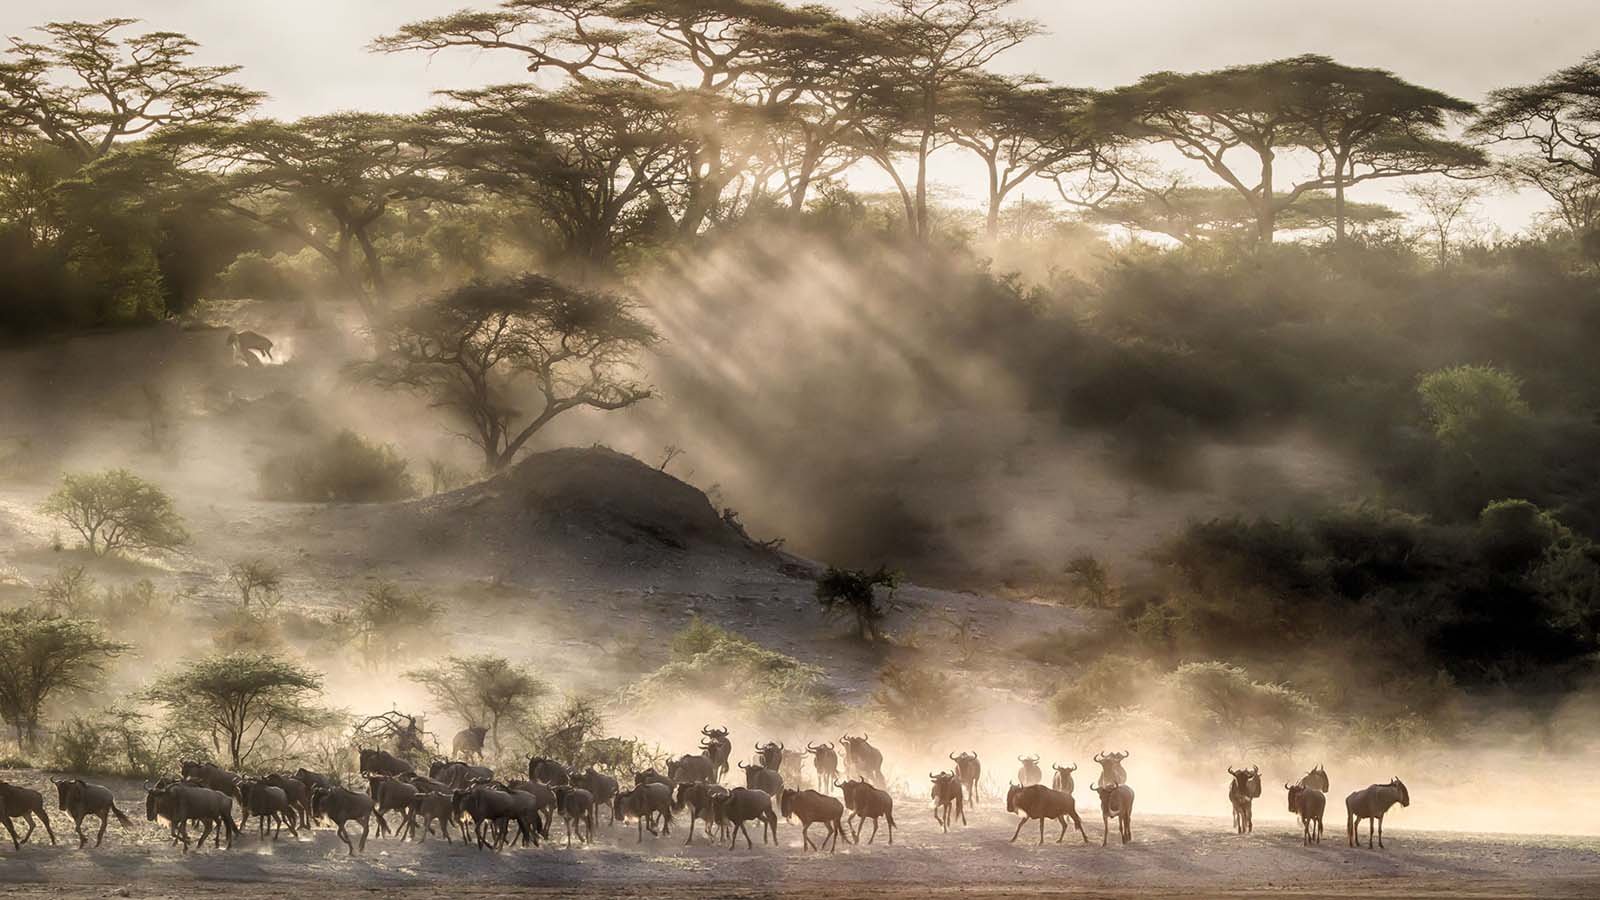 Wildebeests migrating in Serengeti